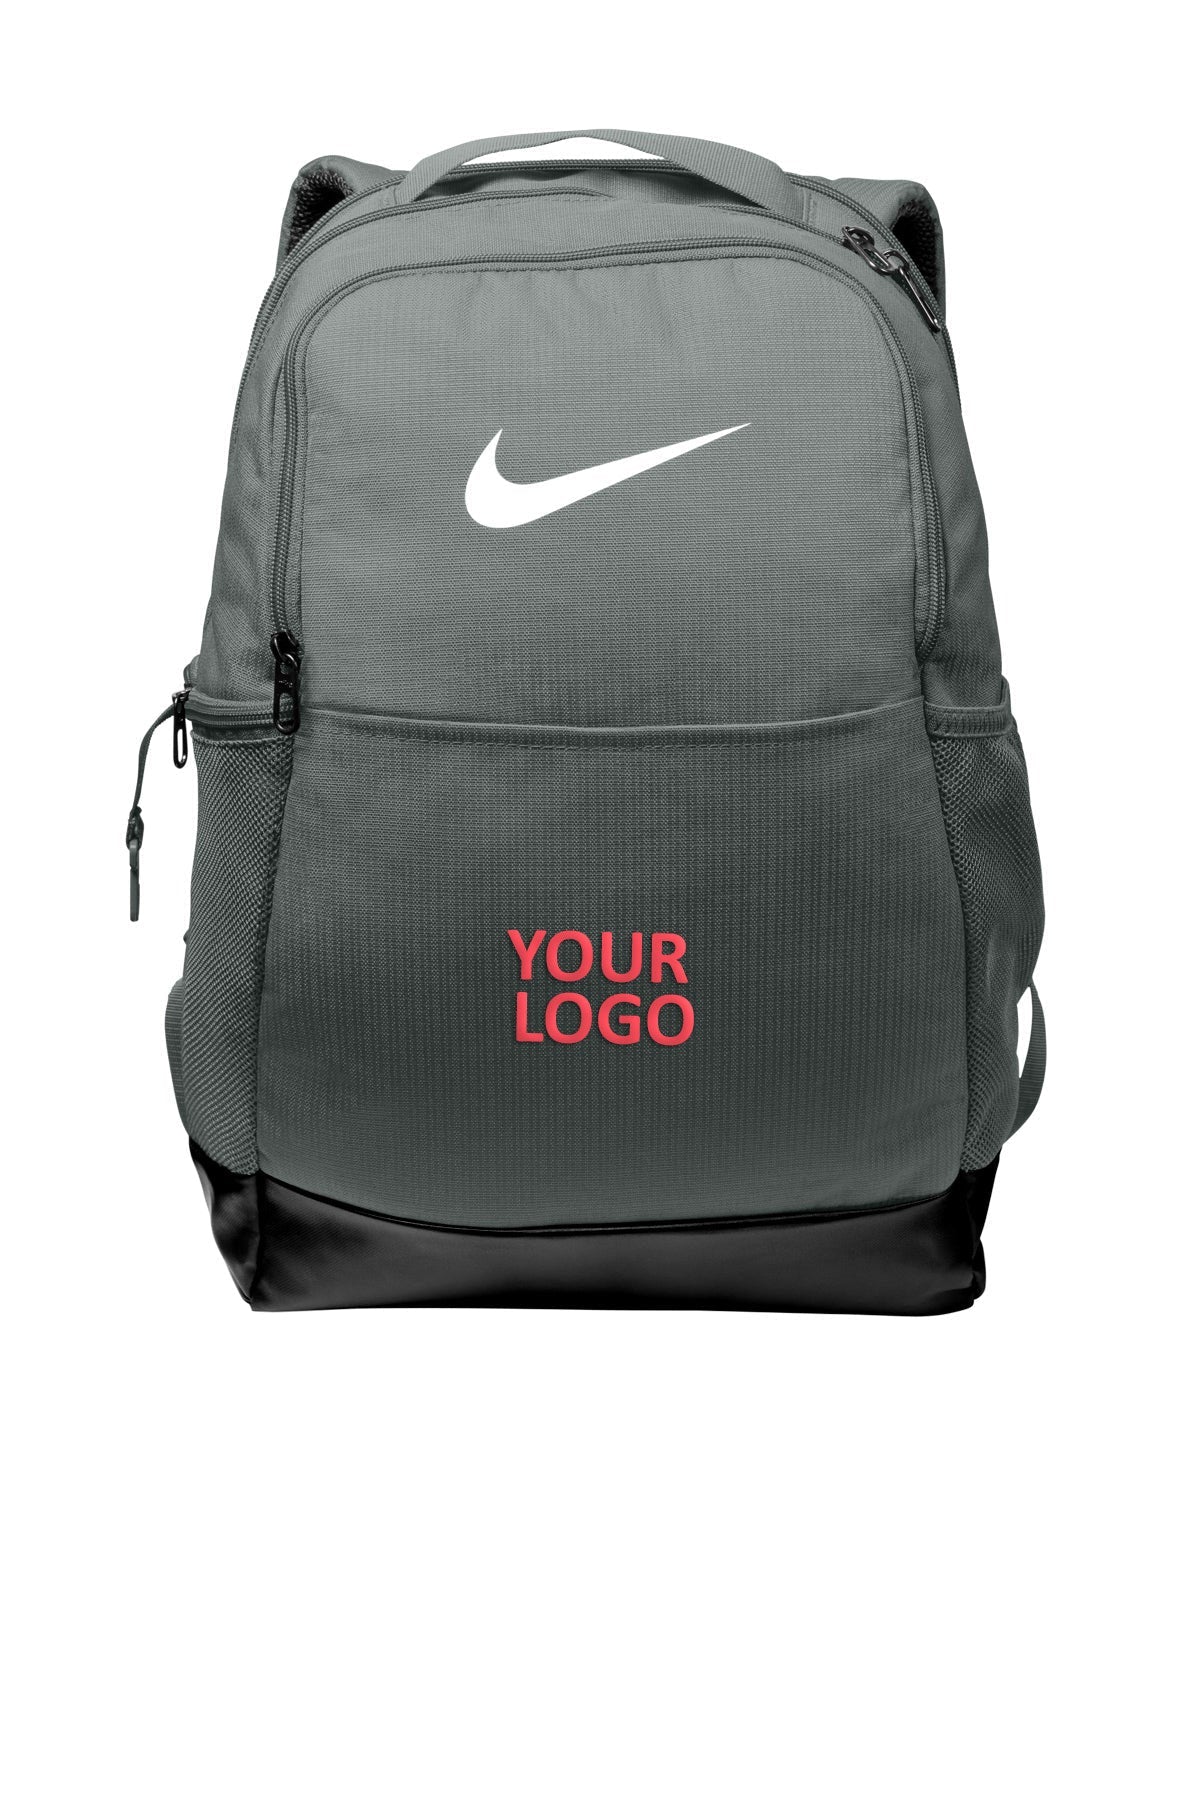 Branded Nike Brasilia Medium Backpack NKDH7709 Flint Grey